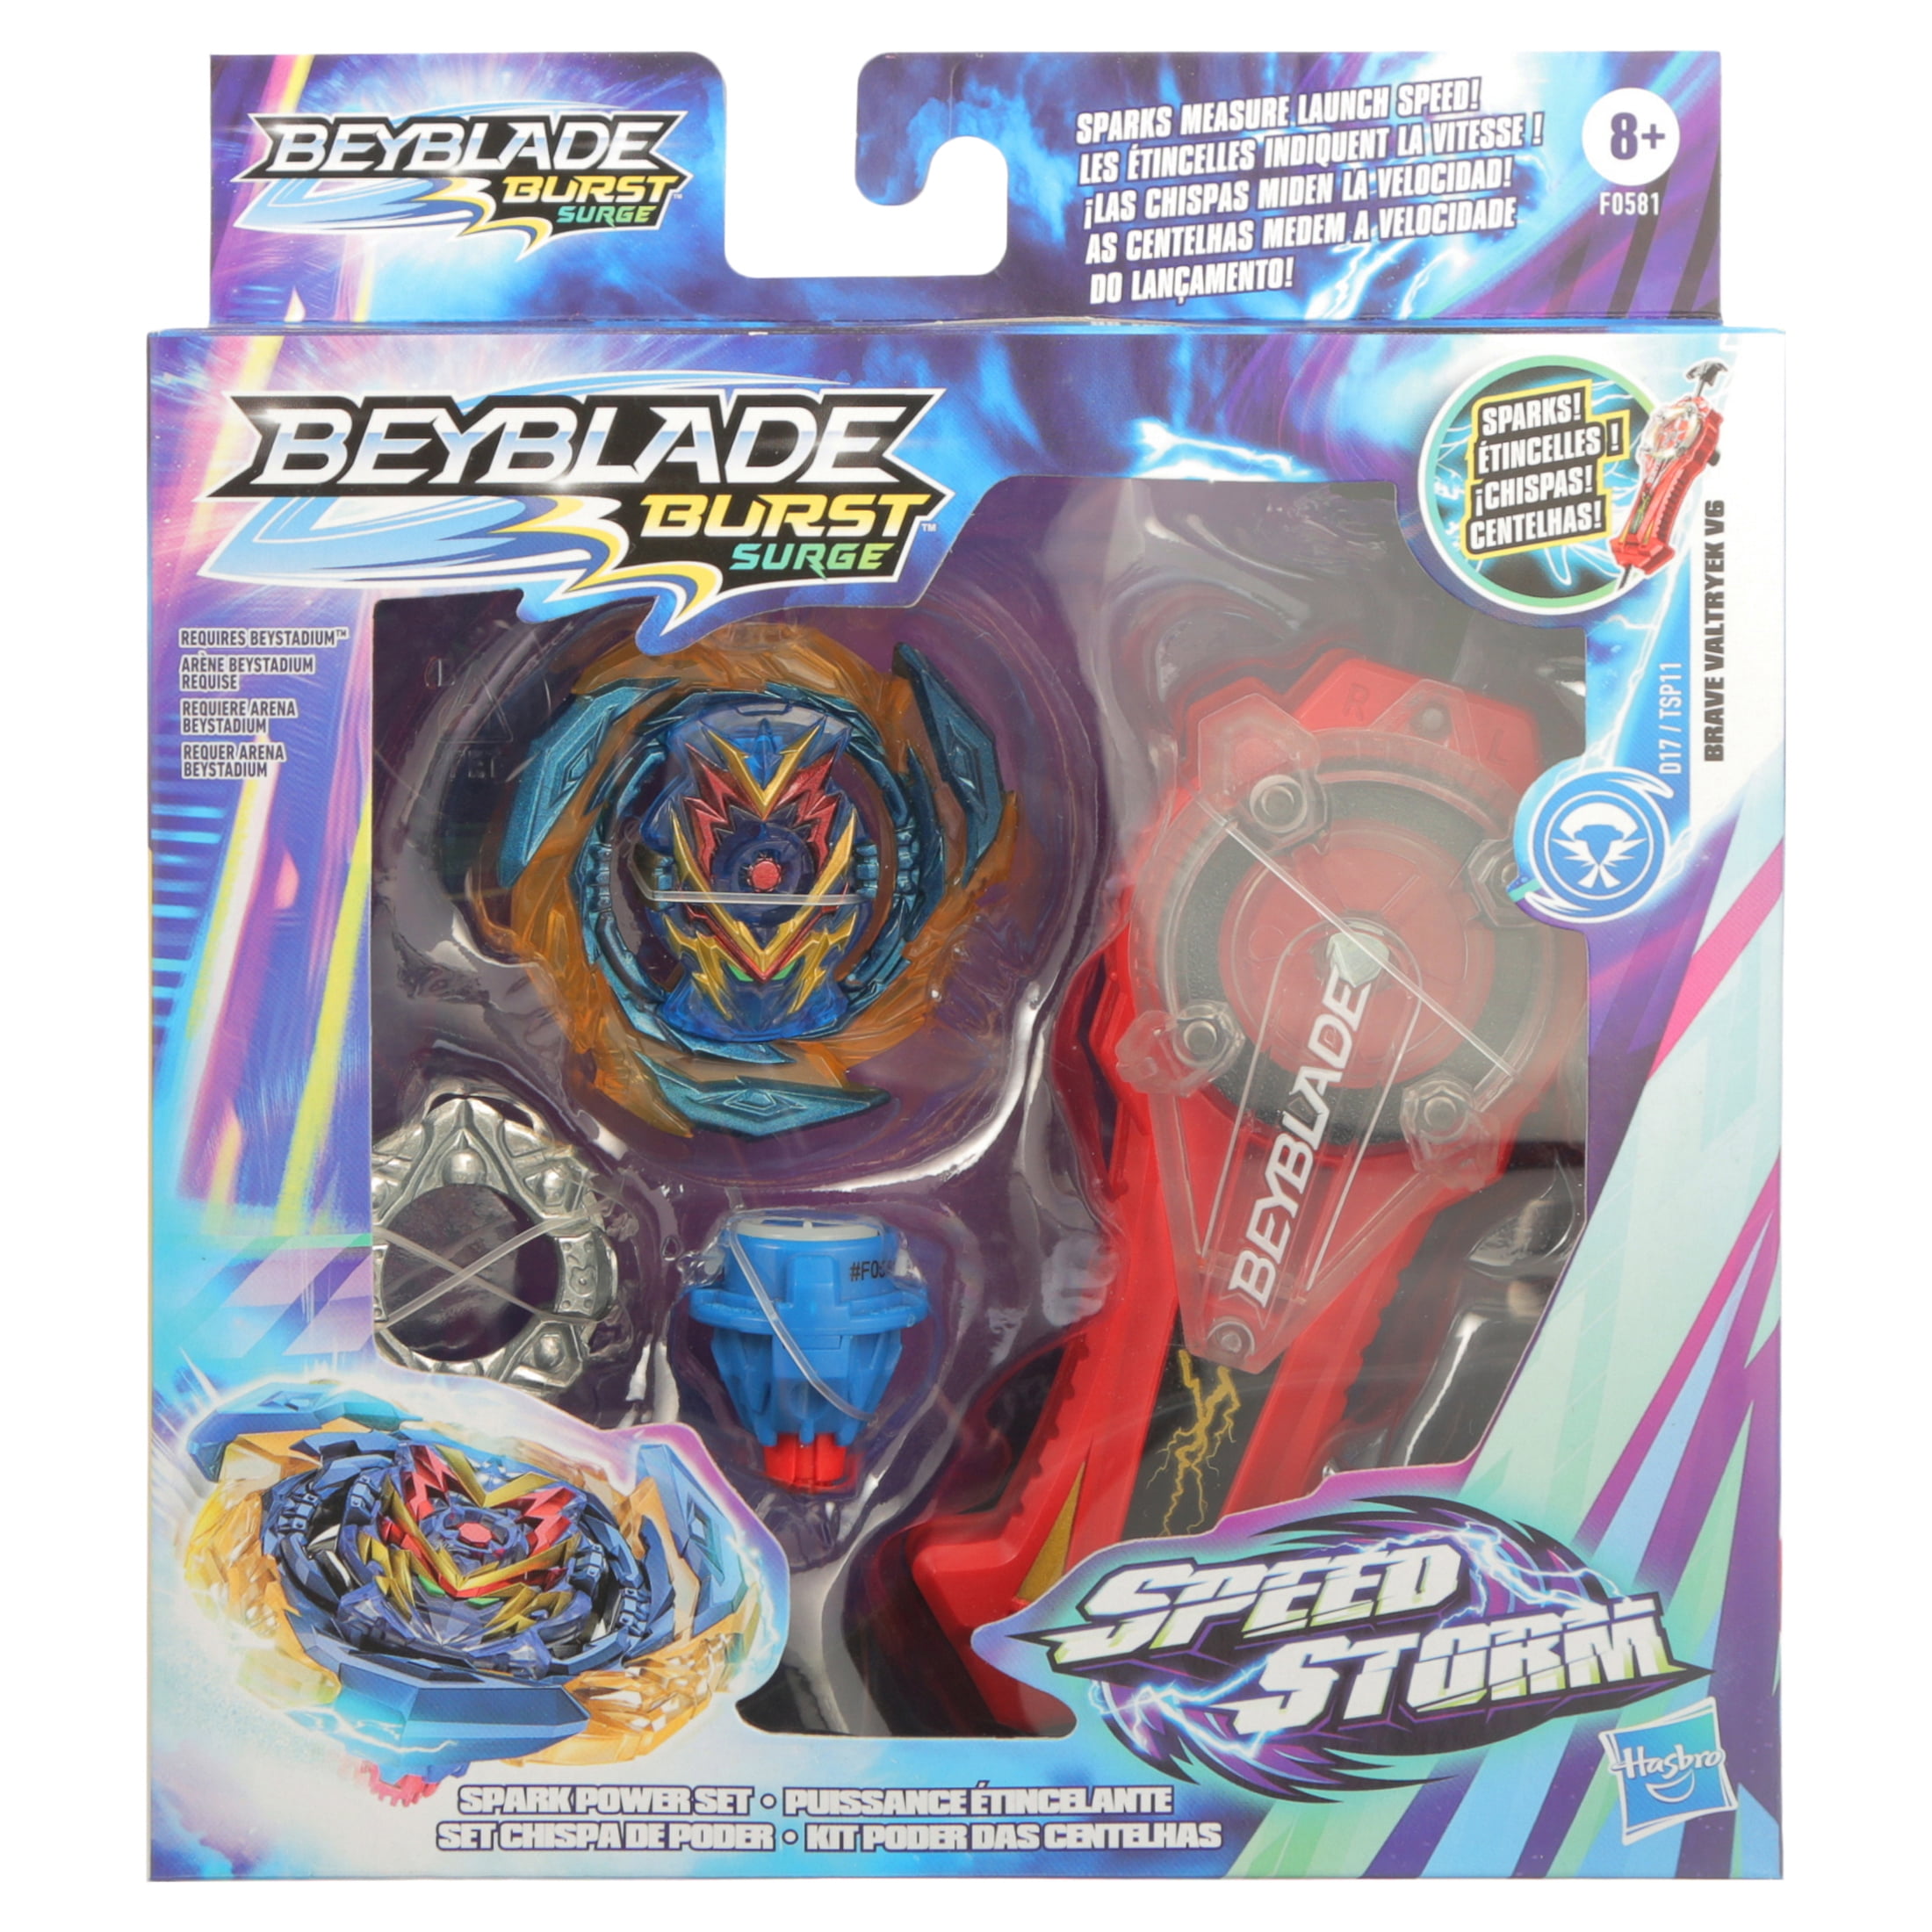 Beyblade Burst Surge Speedstorm Spark Power Set, Includes Top and Launcher